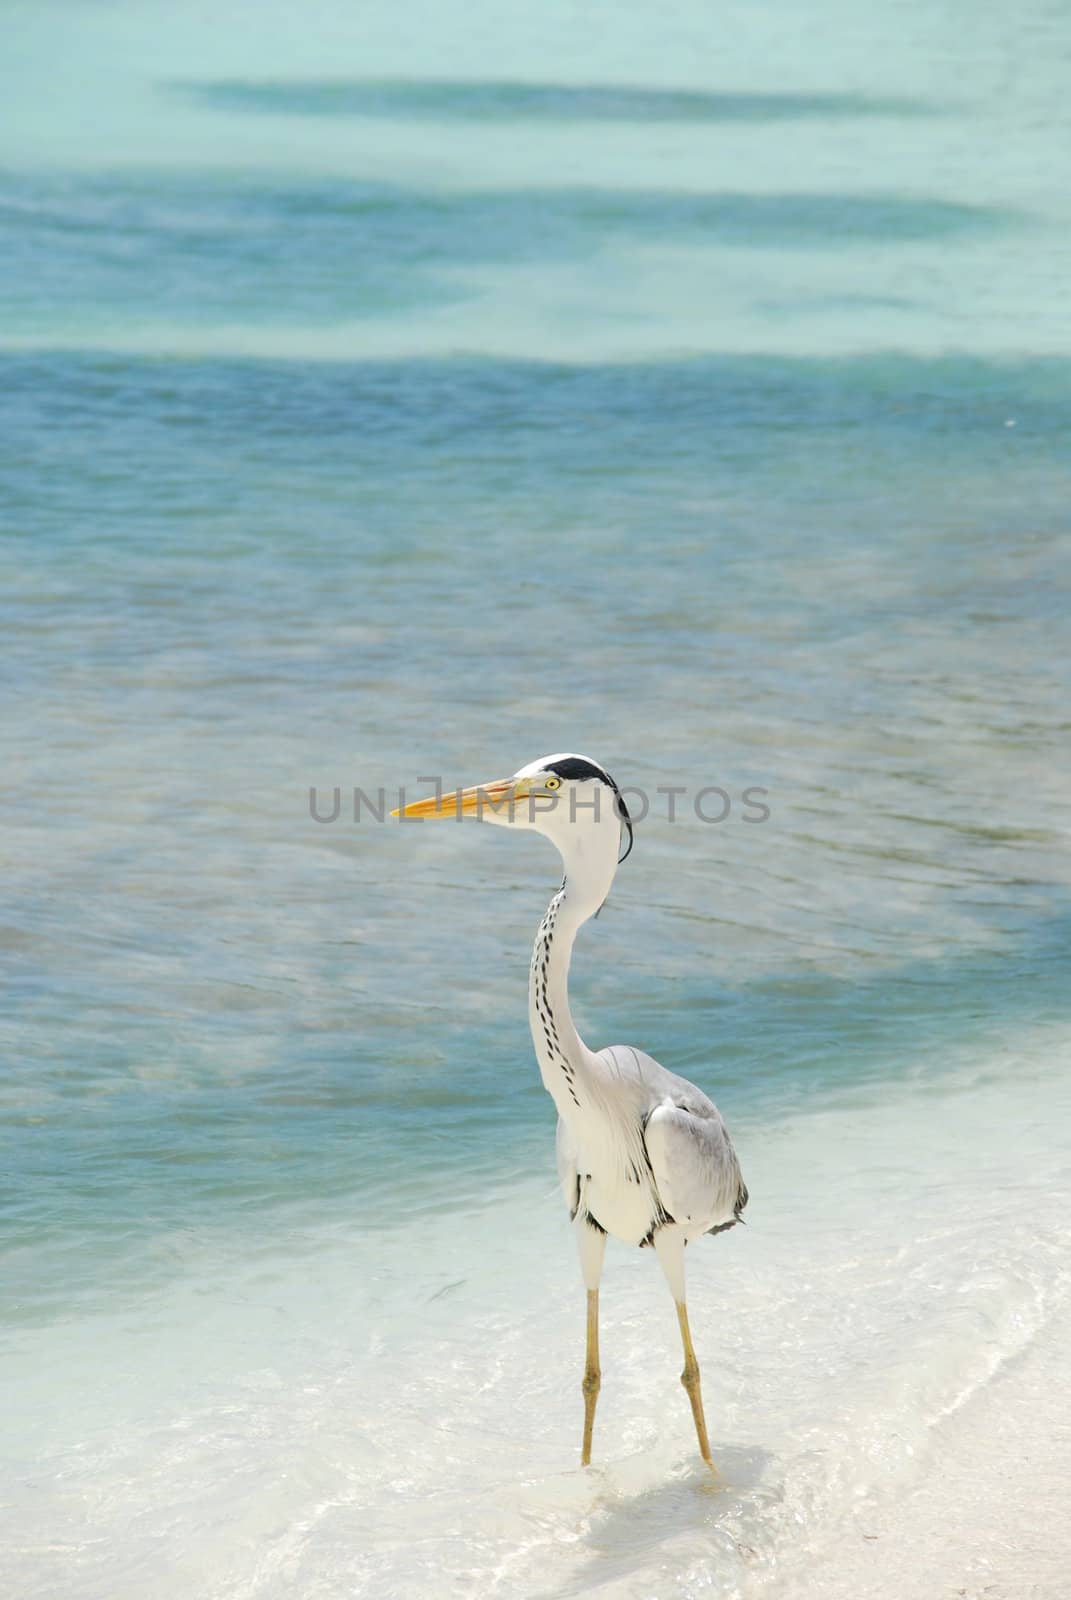 Heron on a maldivian island by luissantos84